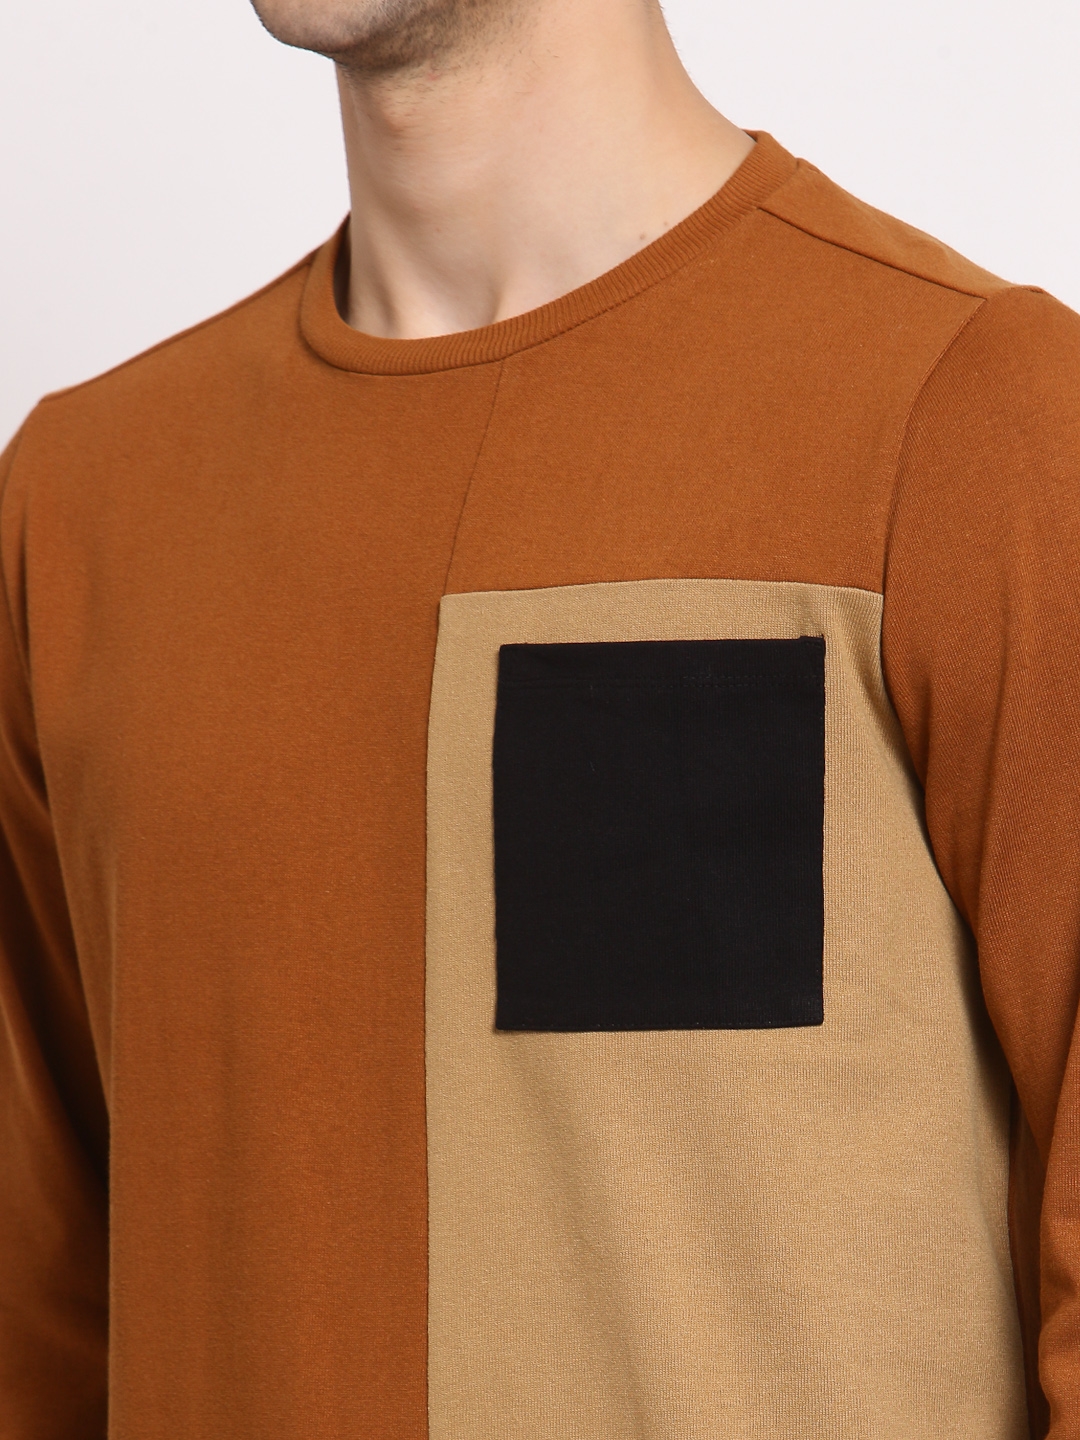 YOONOY | Men's Brown Cotton Colourblock Sweatshirts 4